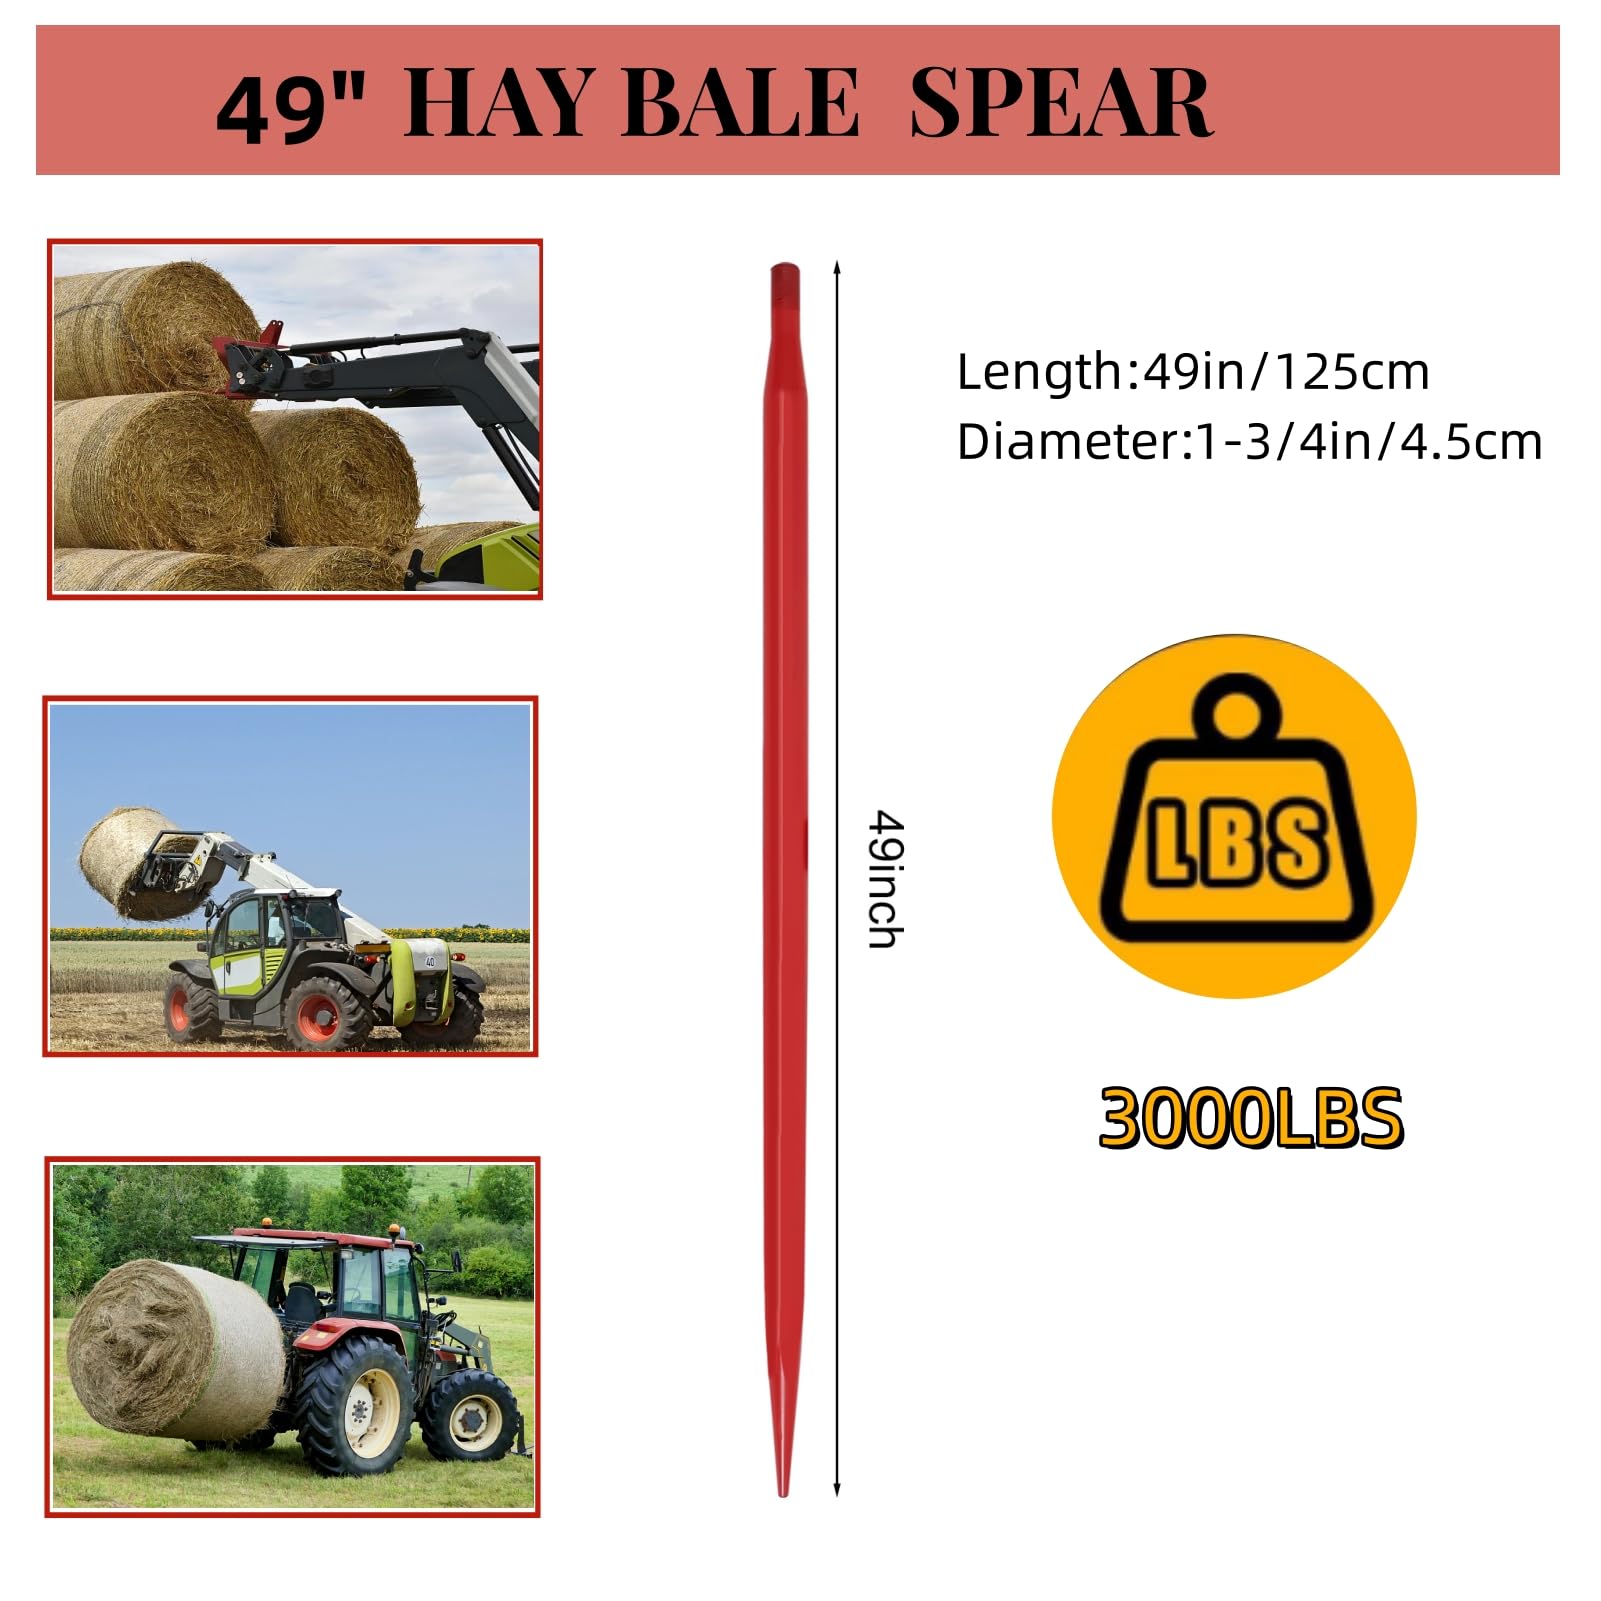 GARVEE 49 Inch Bale Spear 3000 lbs Capacity Hay Red Coated Bale Forks